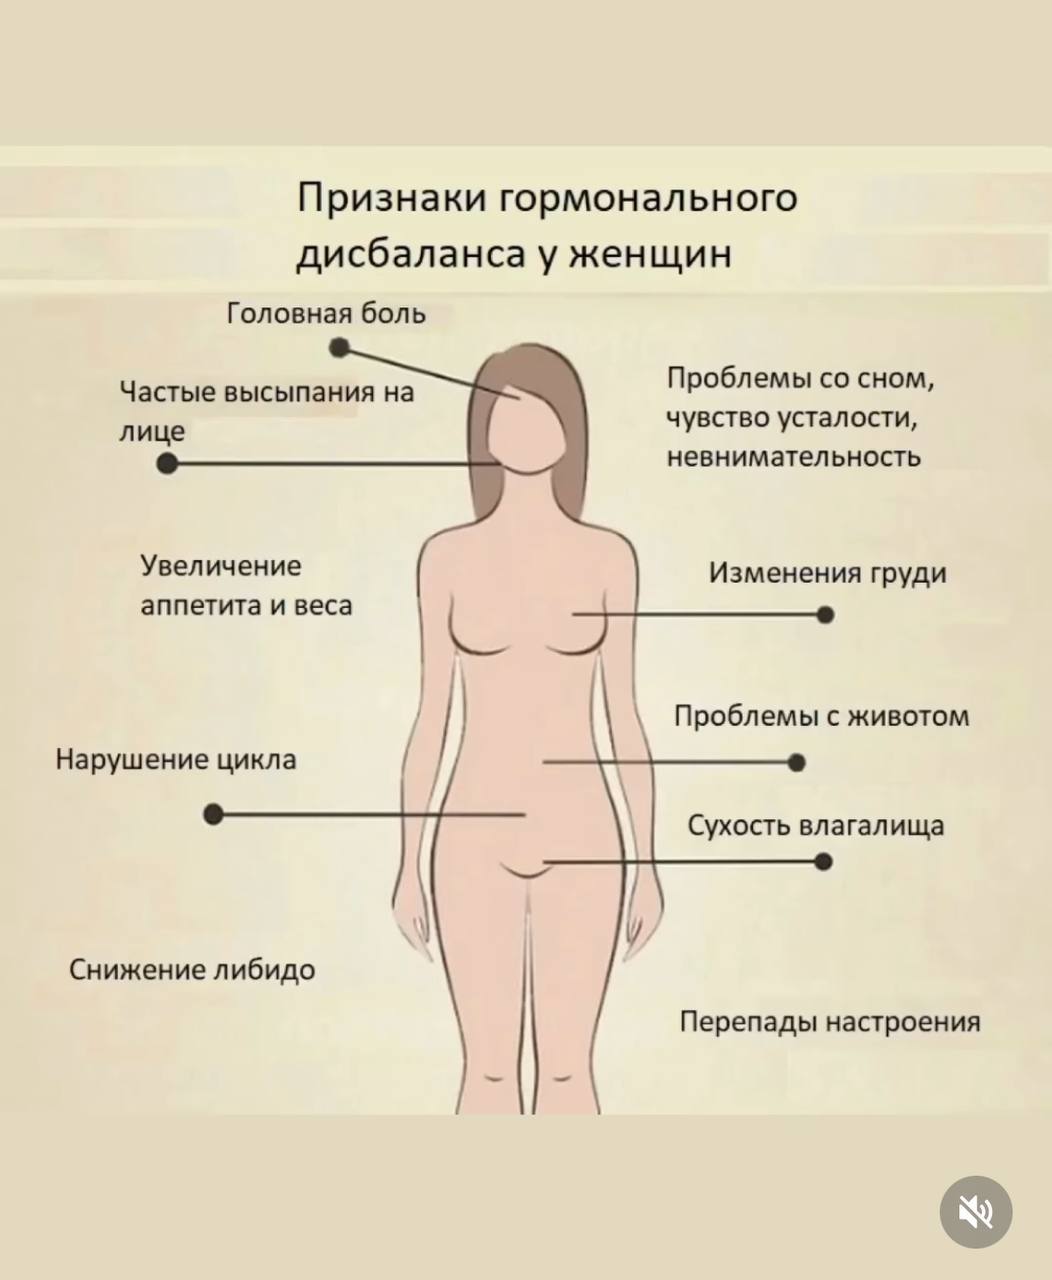 рост груди у женщин лице фото 105